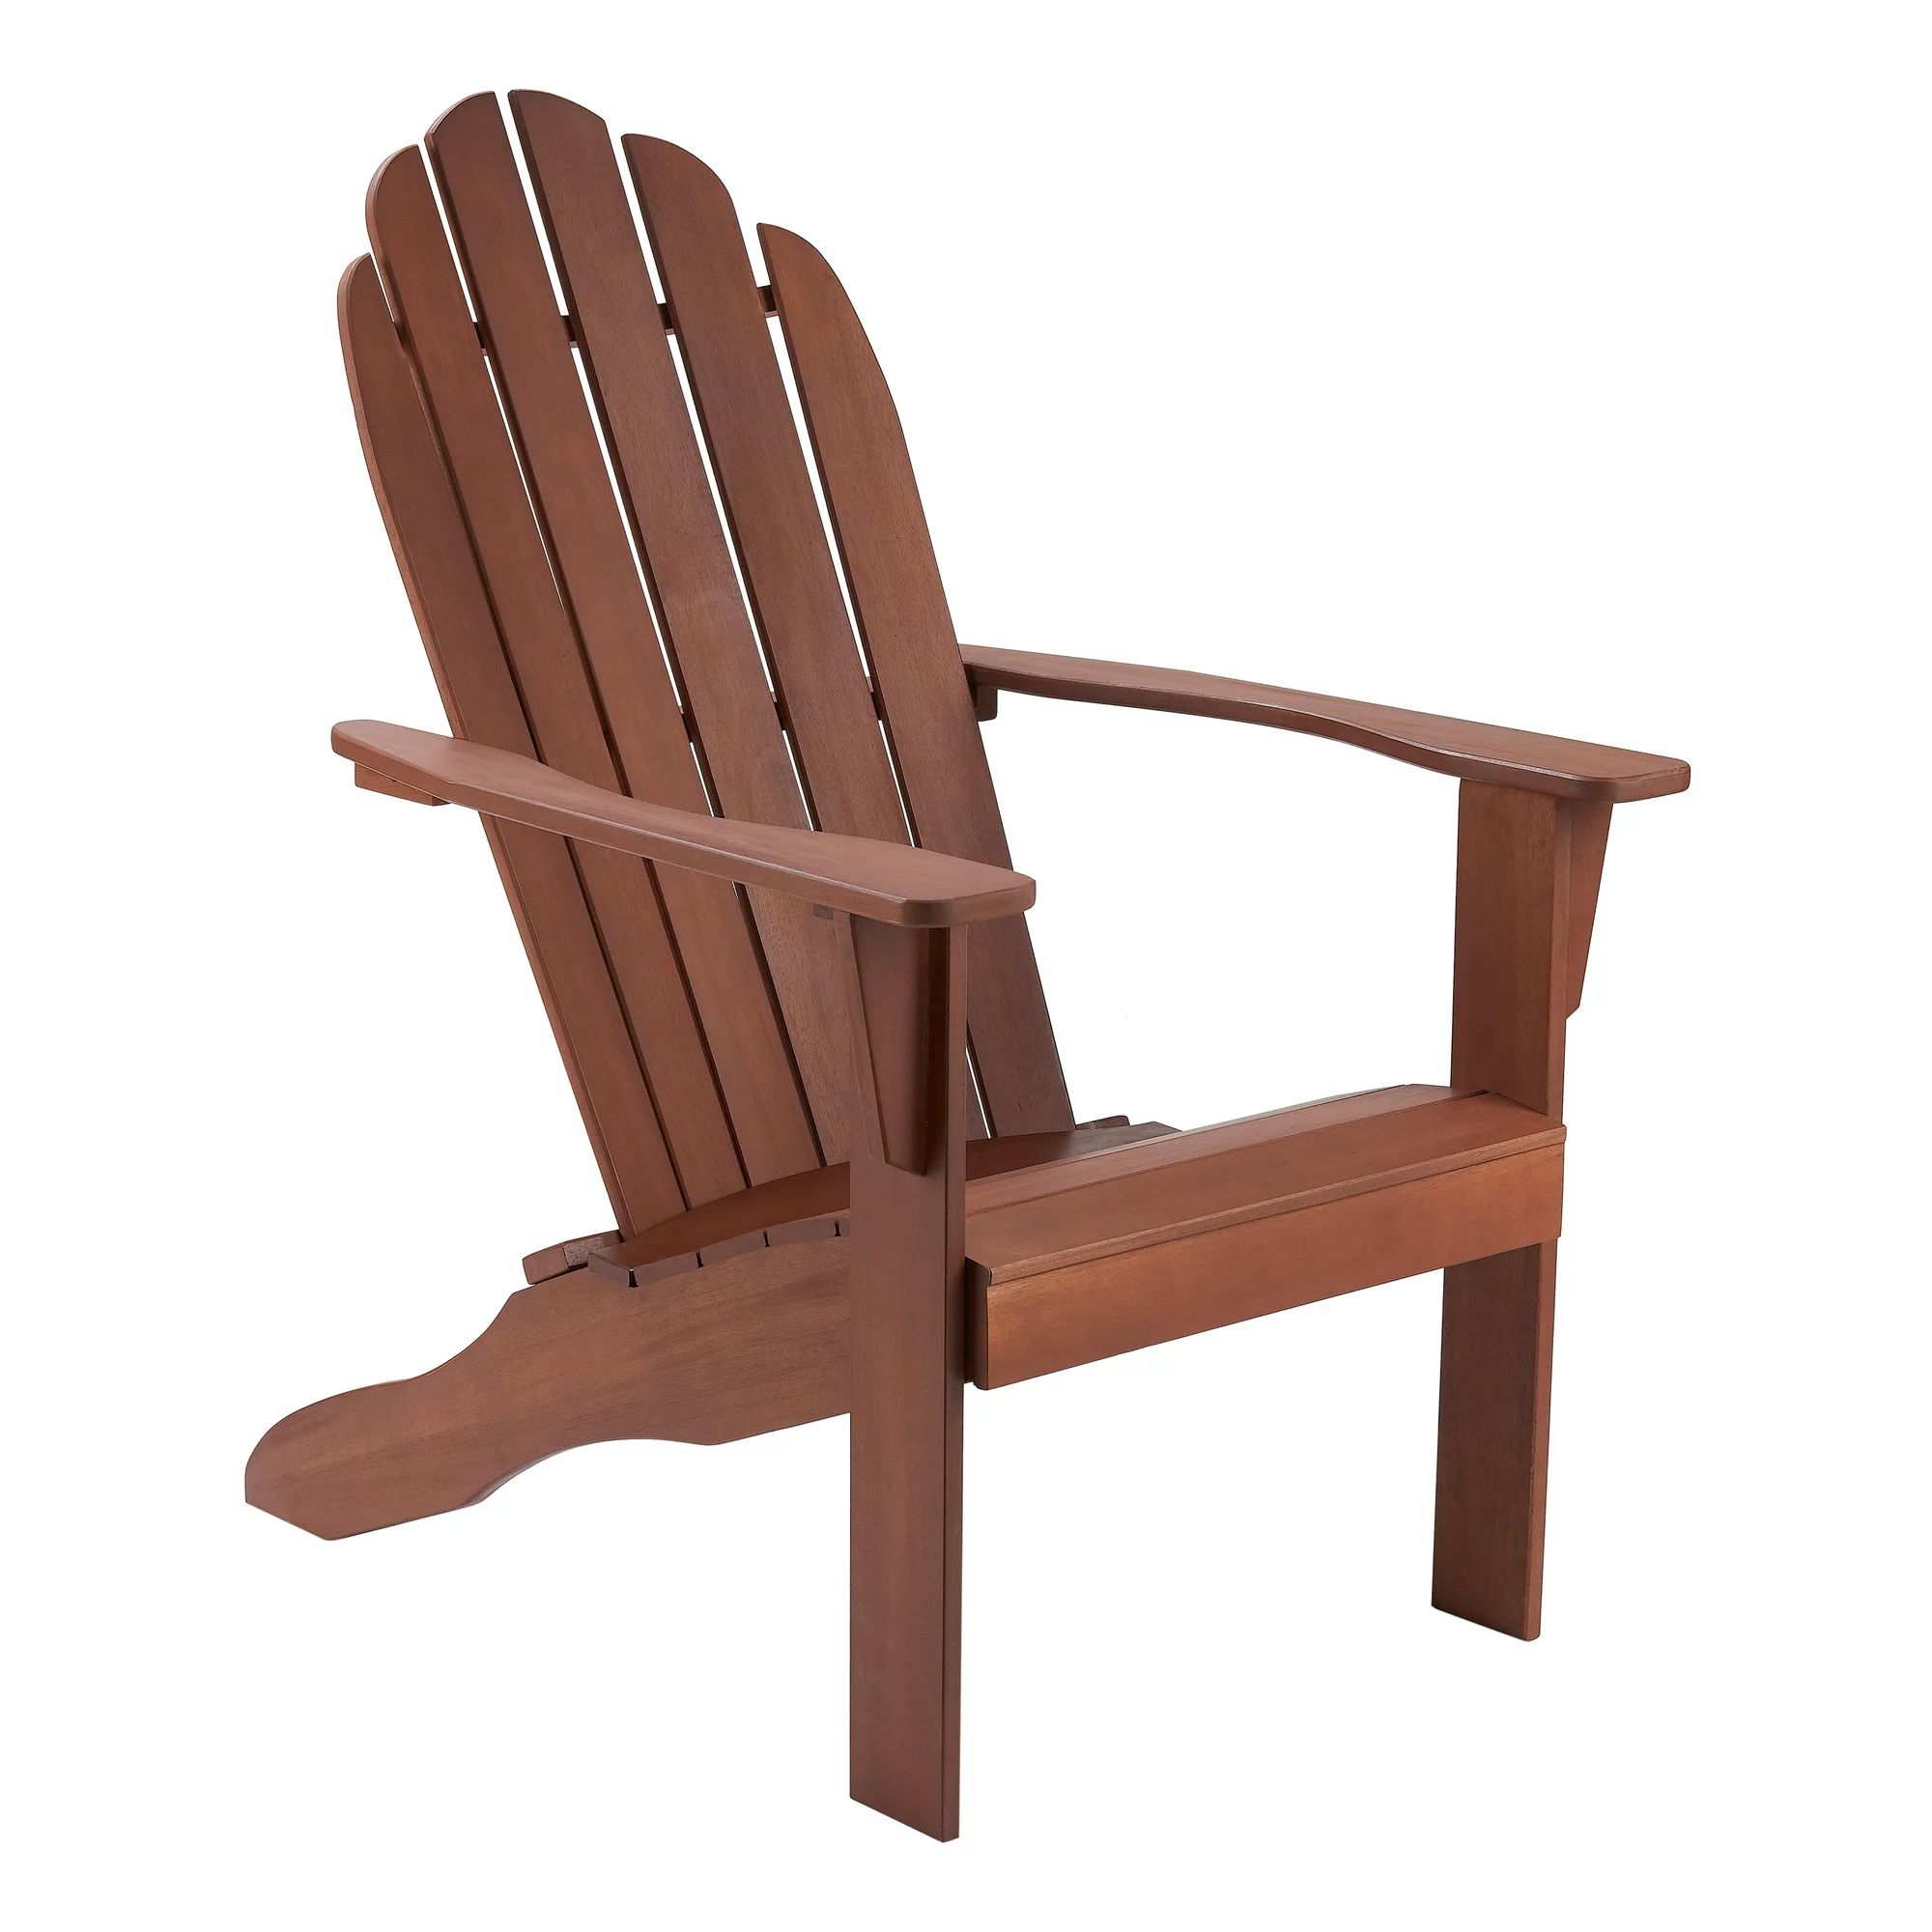 Mainstays Wooden Outdoor Adirondack Chair, Natural Finish, Solid Hardwood | Walmart (US)